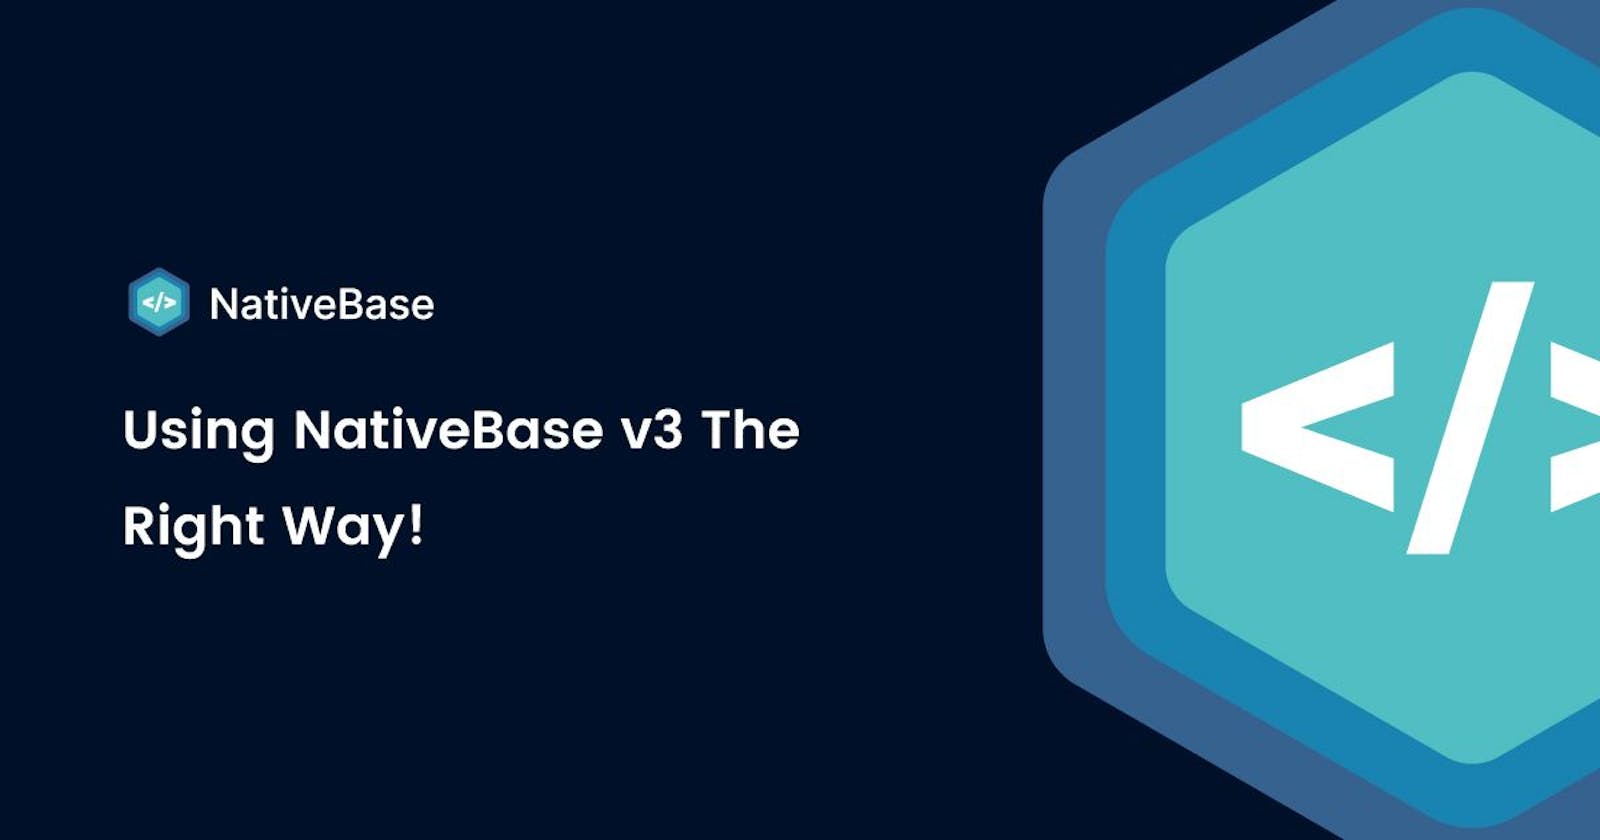 Using NativeBase v3 the right way